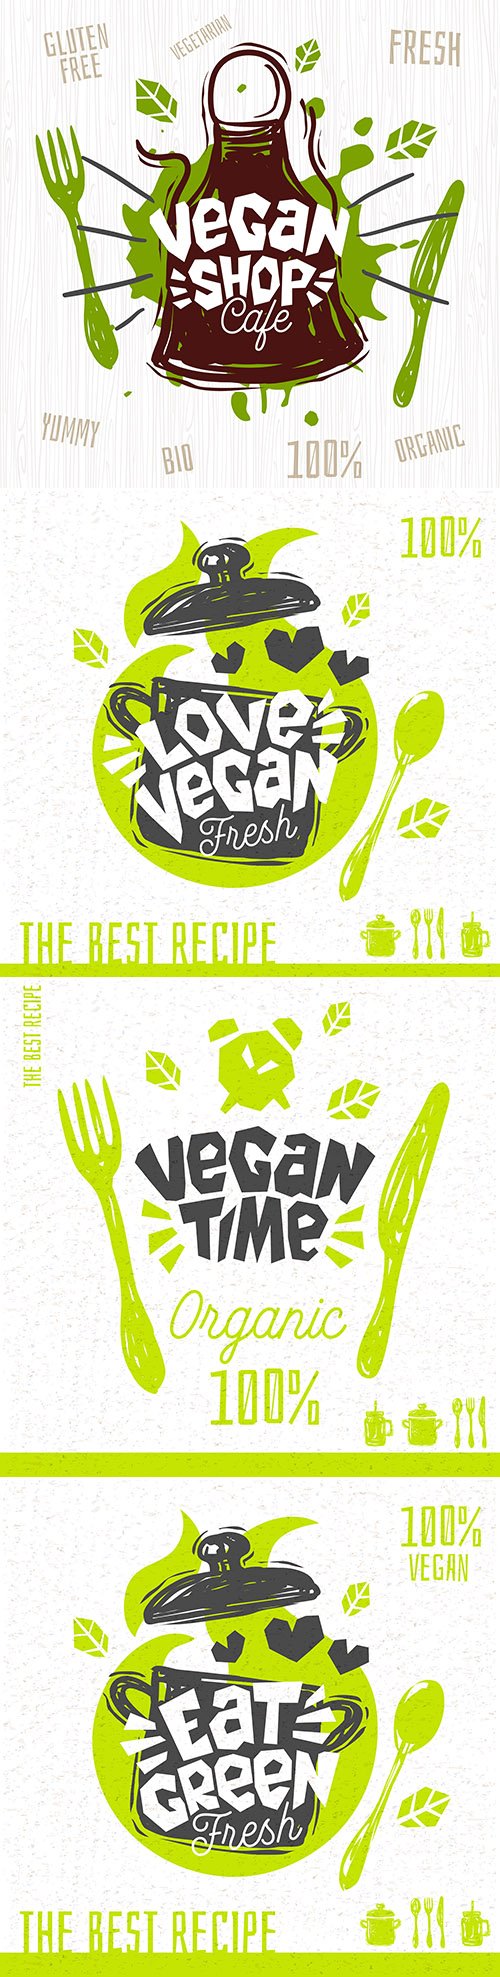 Vegan shop cafe logo fresh organic hand painted